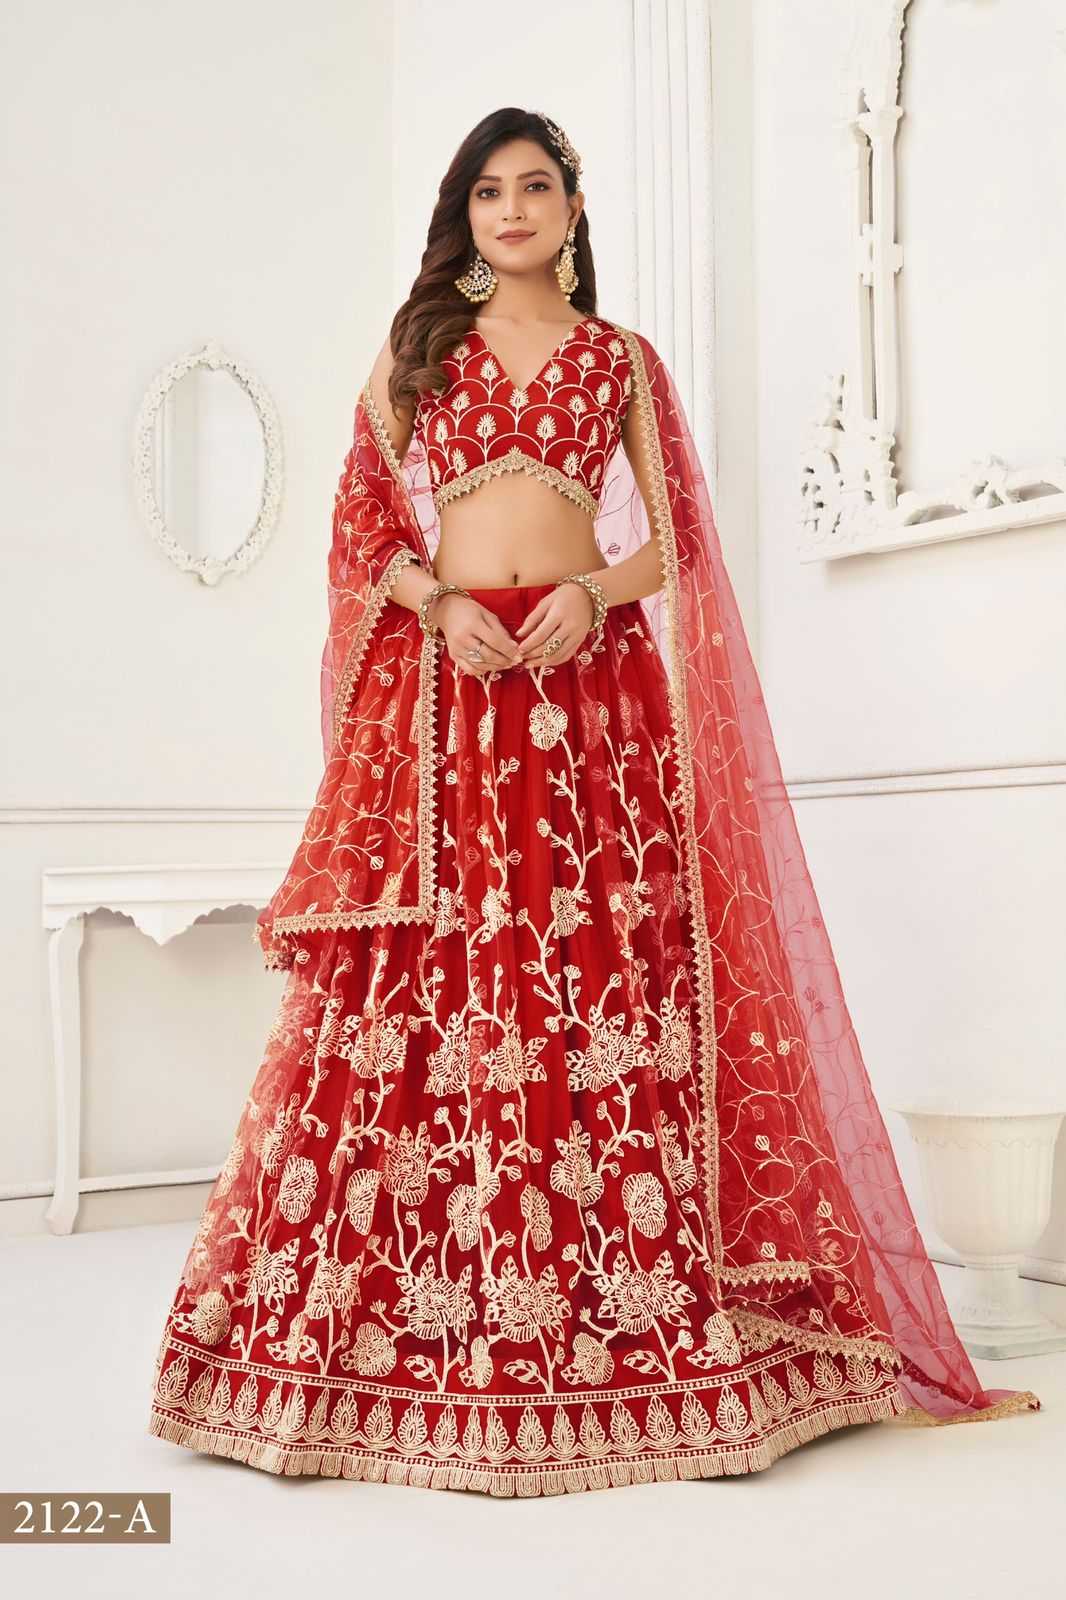 narayani fashion 2122 abcd designer semistitch lehenga choli wedding wear exclusive collection